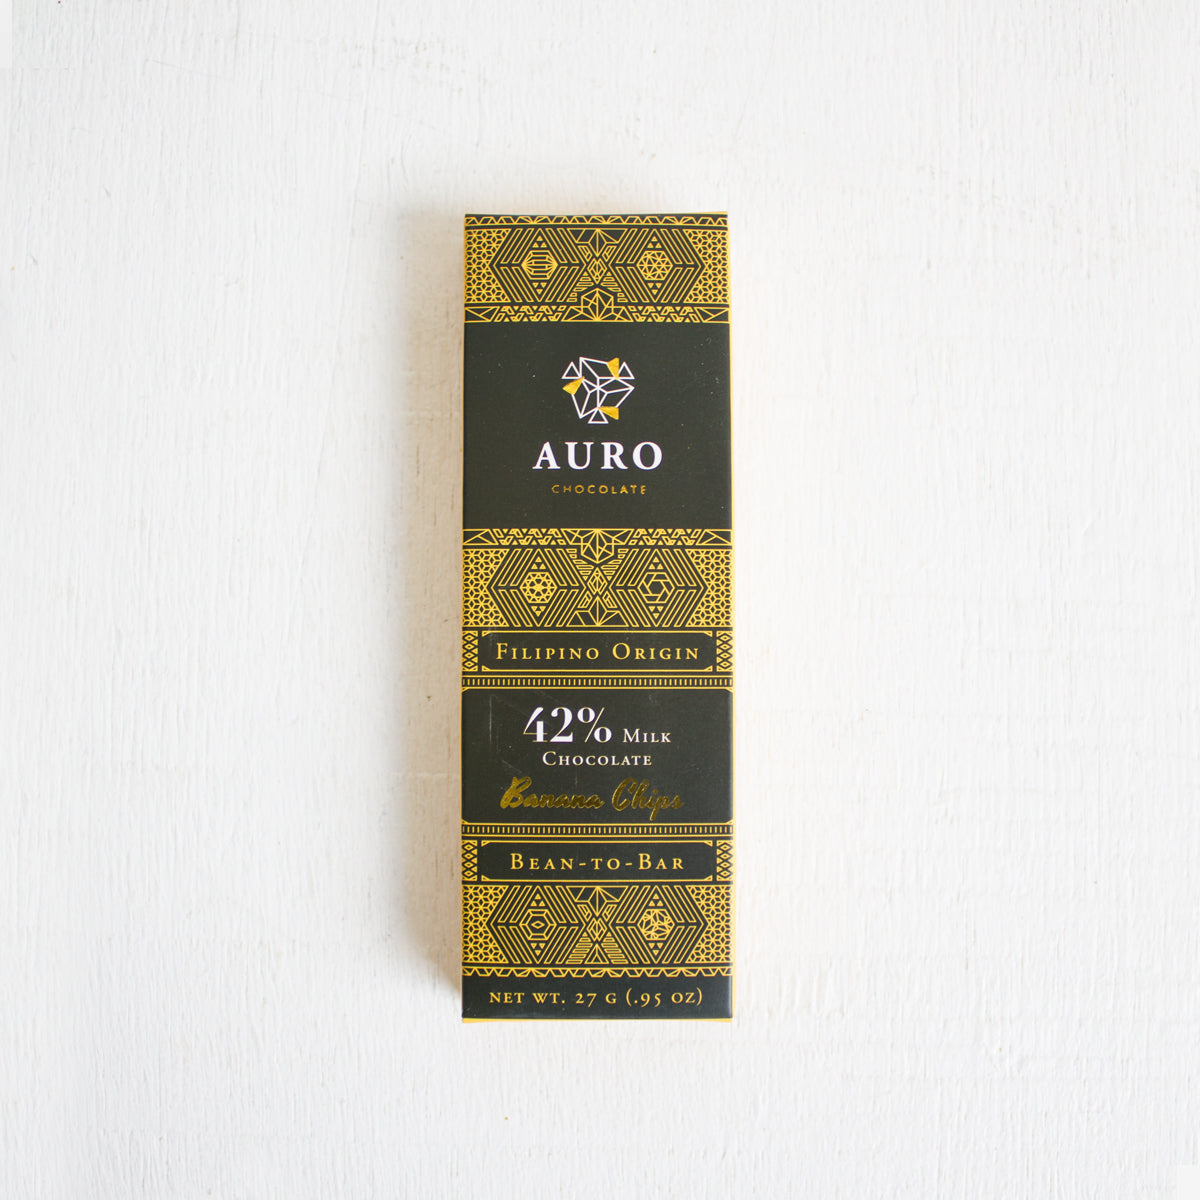 Auro Chocolate - Auro Heritage Collection Gift Set DB Studio